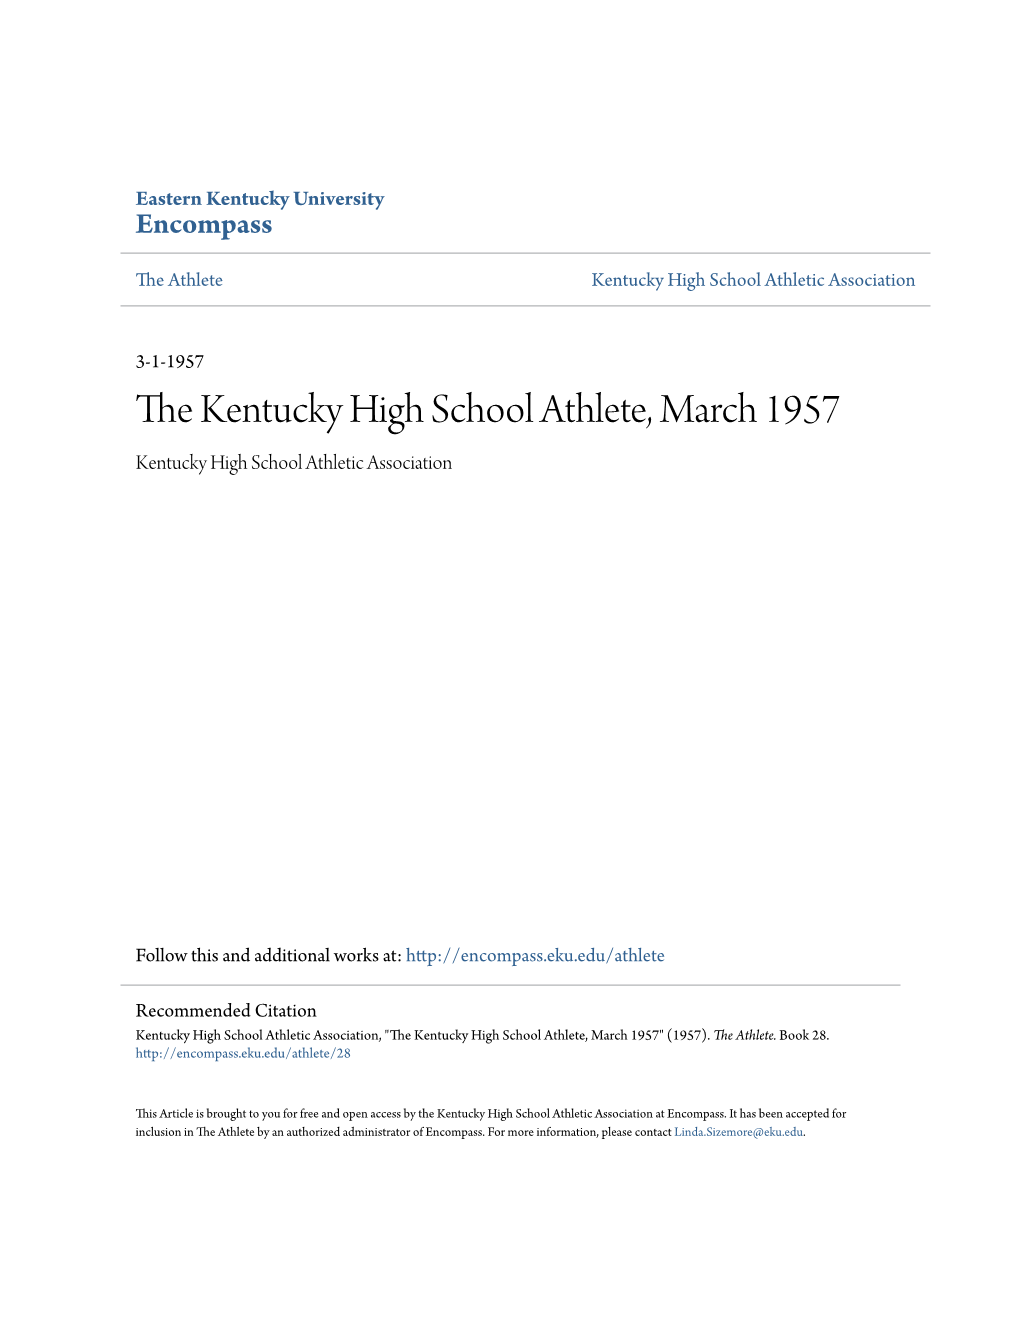 The Kentucky High School Athlete, March 1957 Kentucky High School Athletic Association